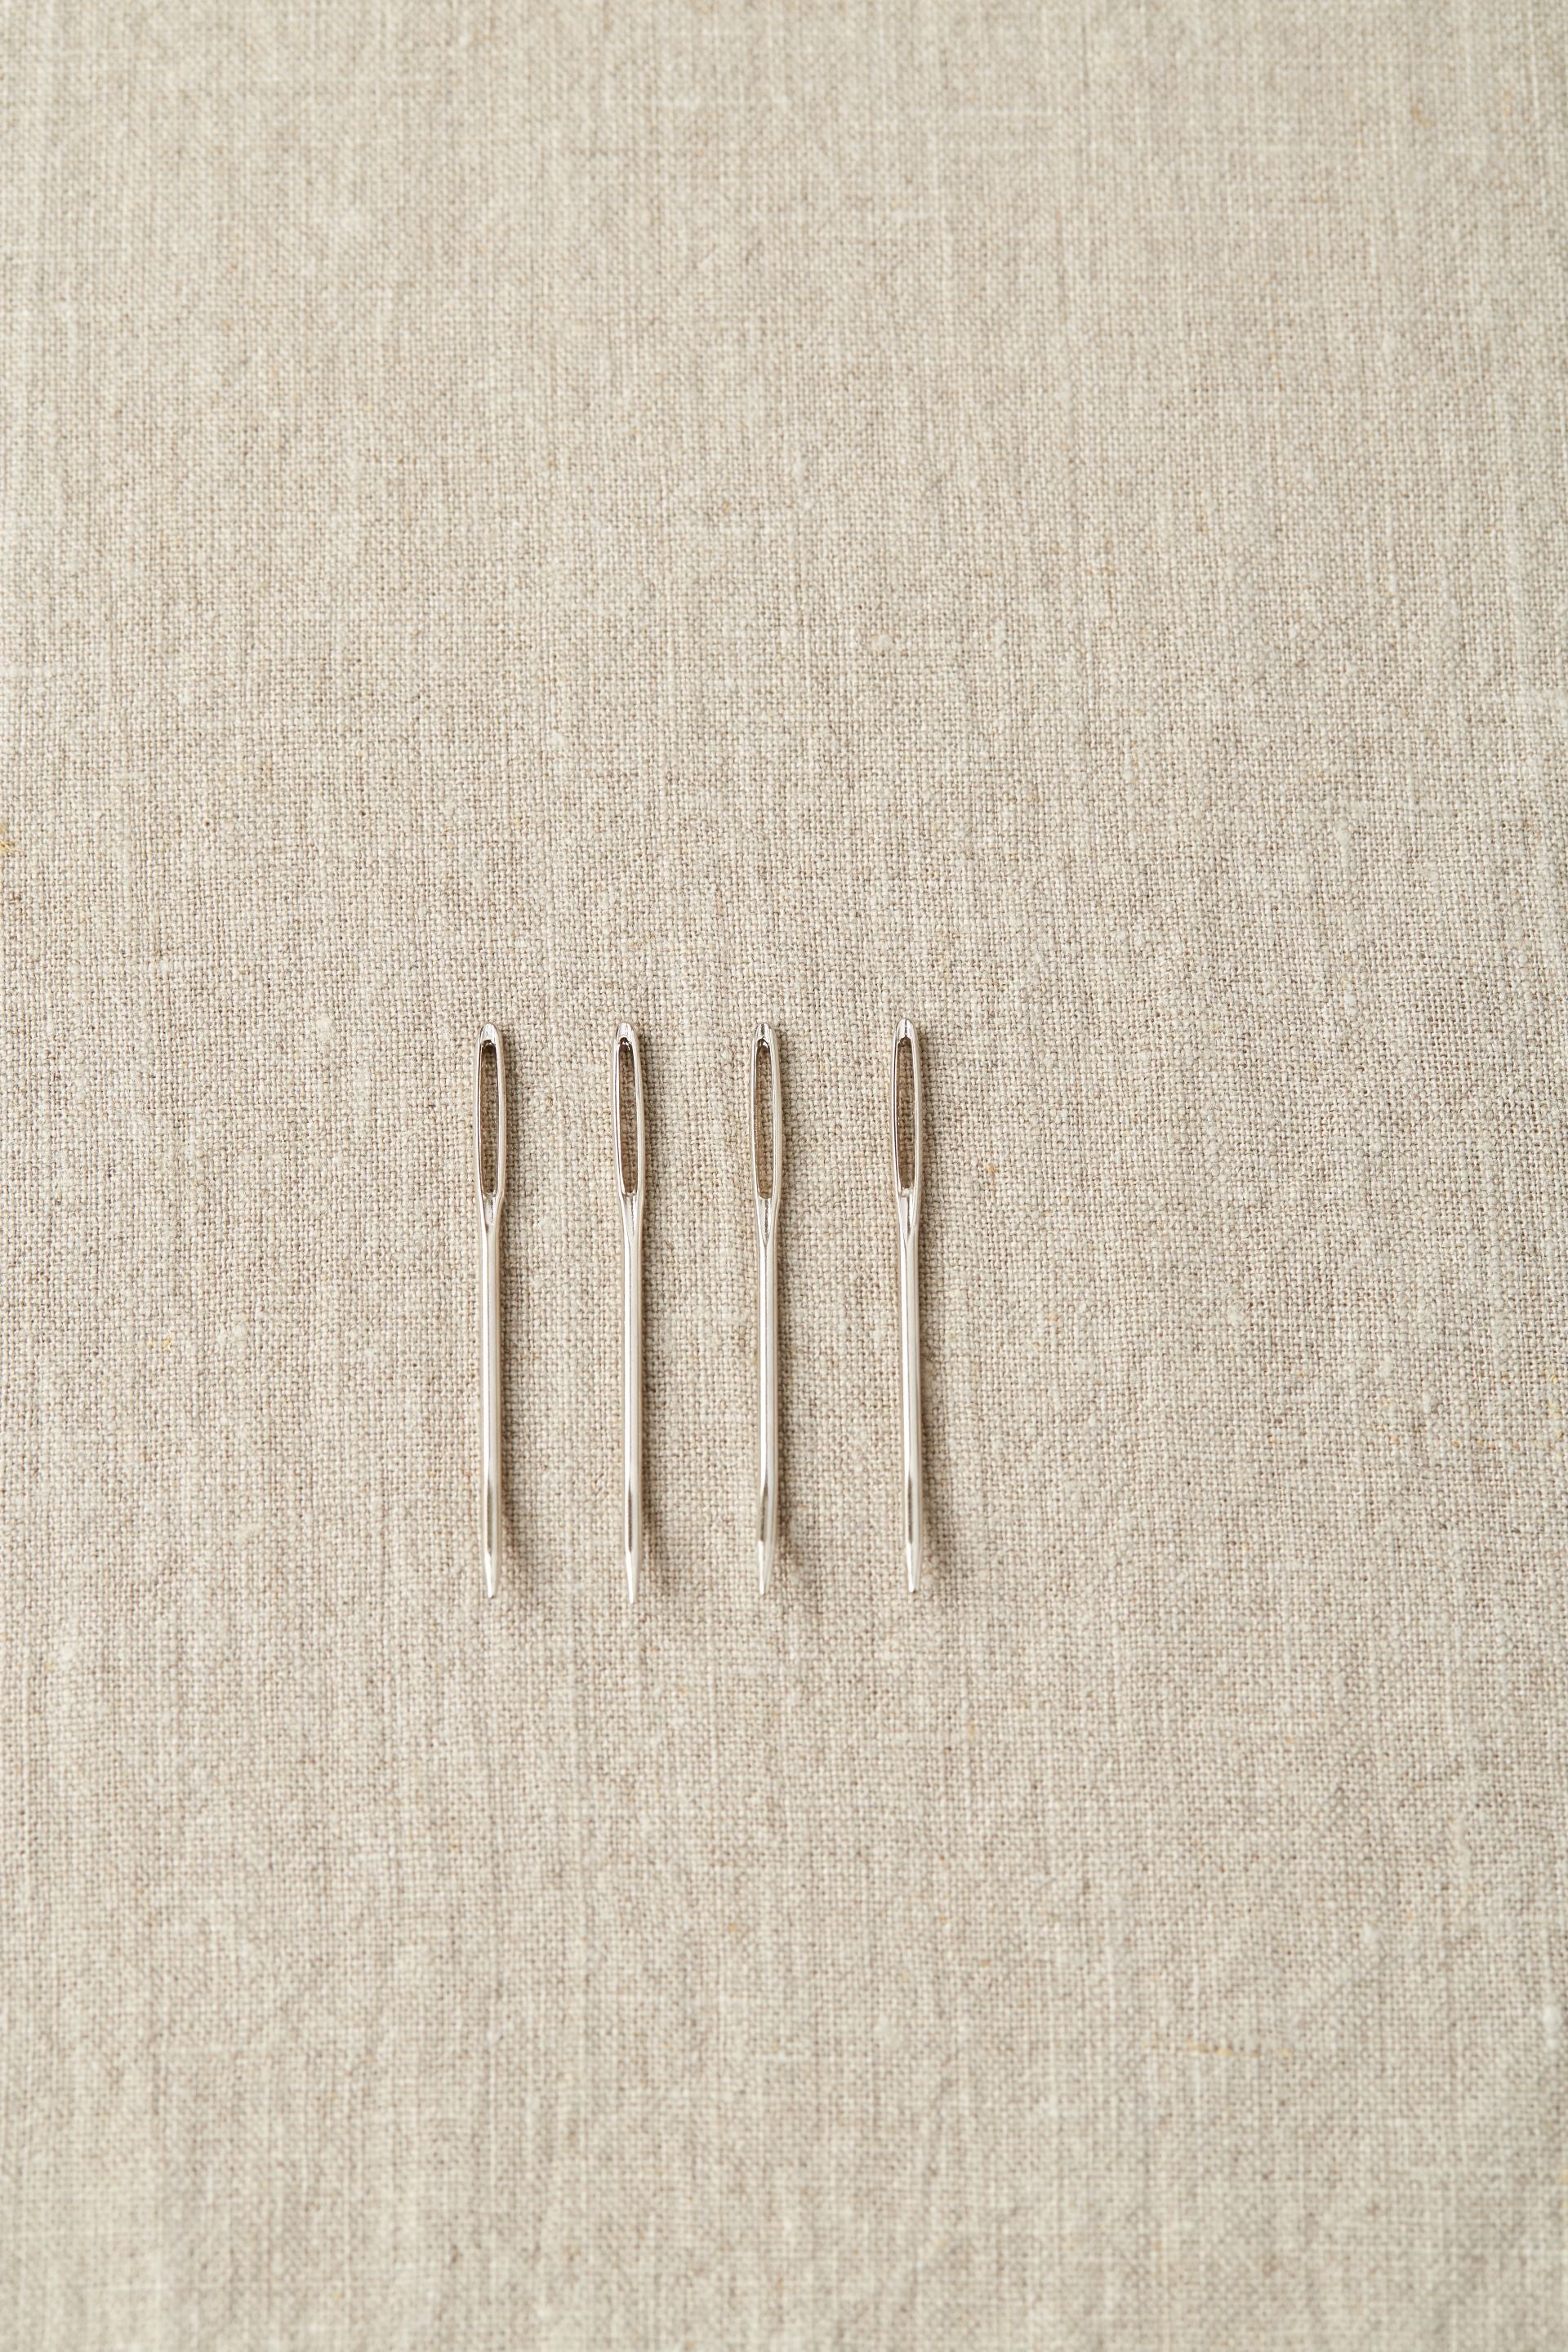 Bent-Tip Tapestry Needles